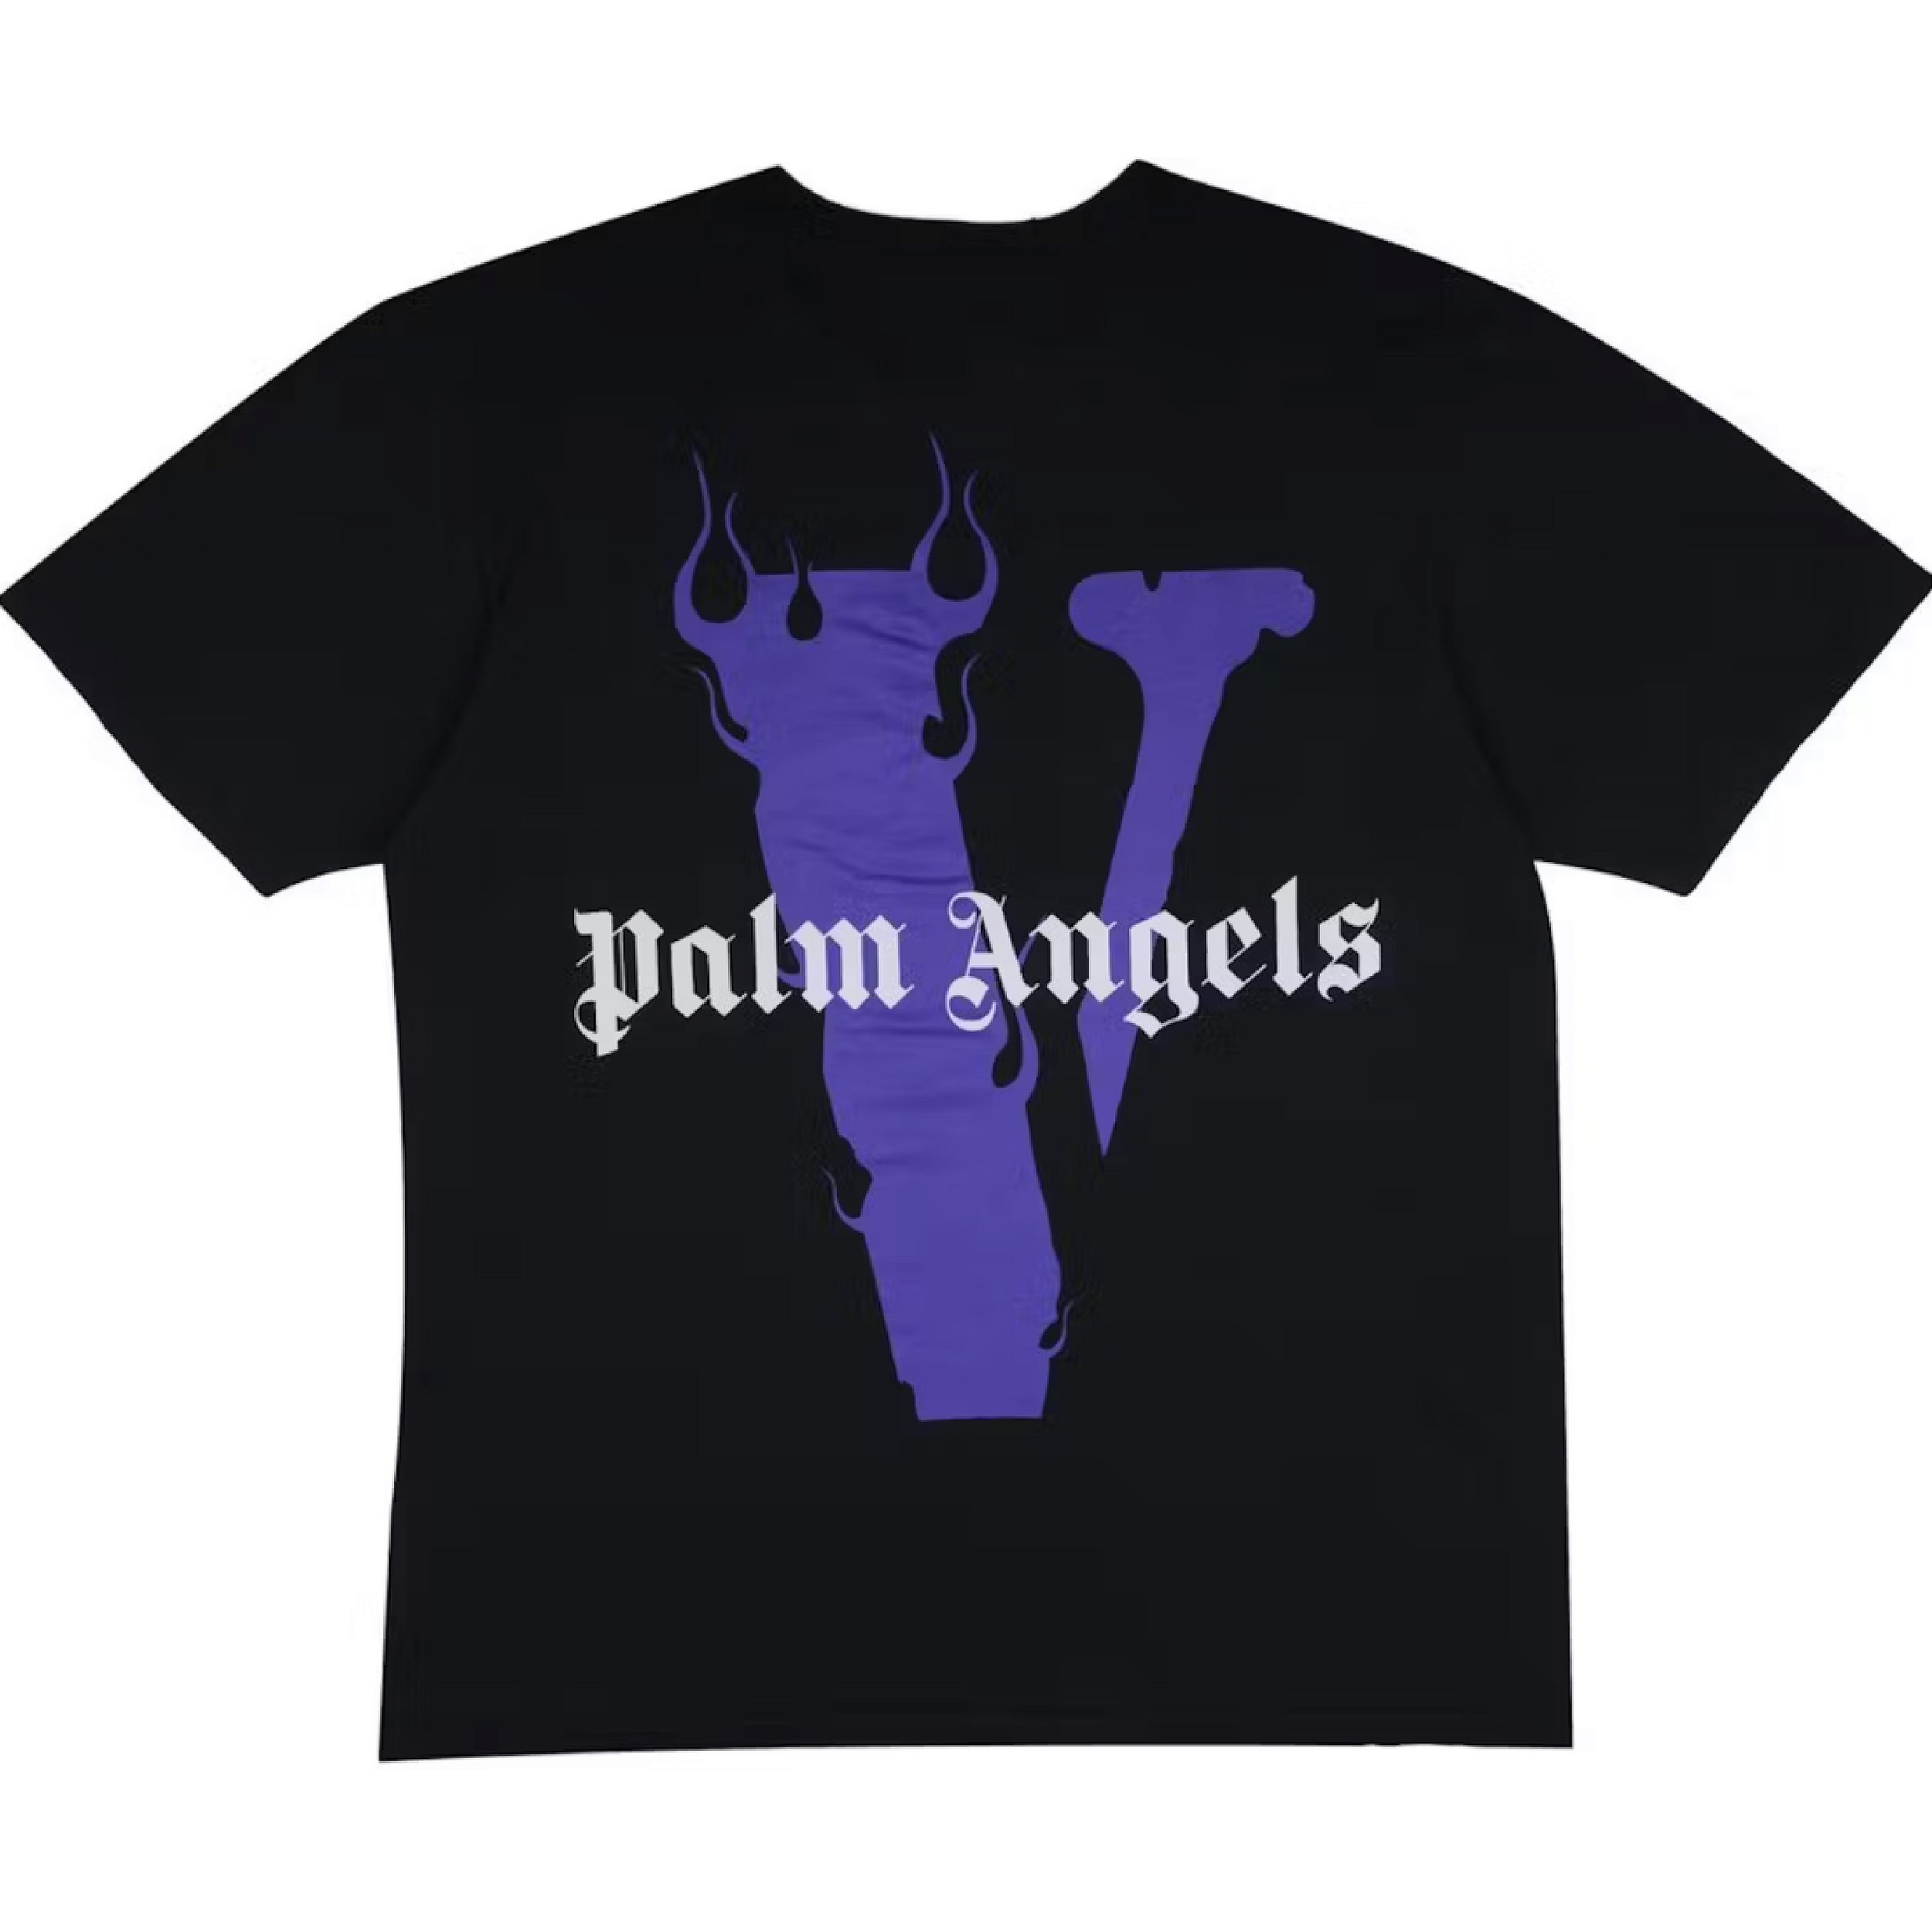 Palm angels x vlone - Shirts